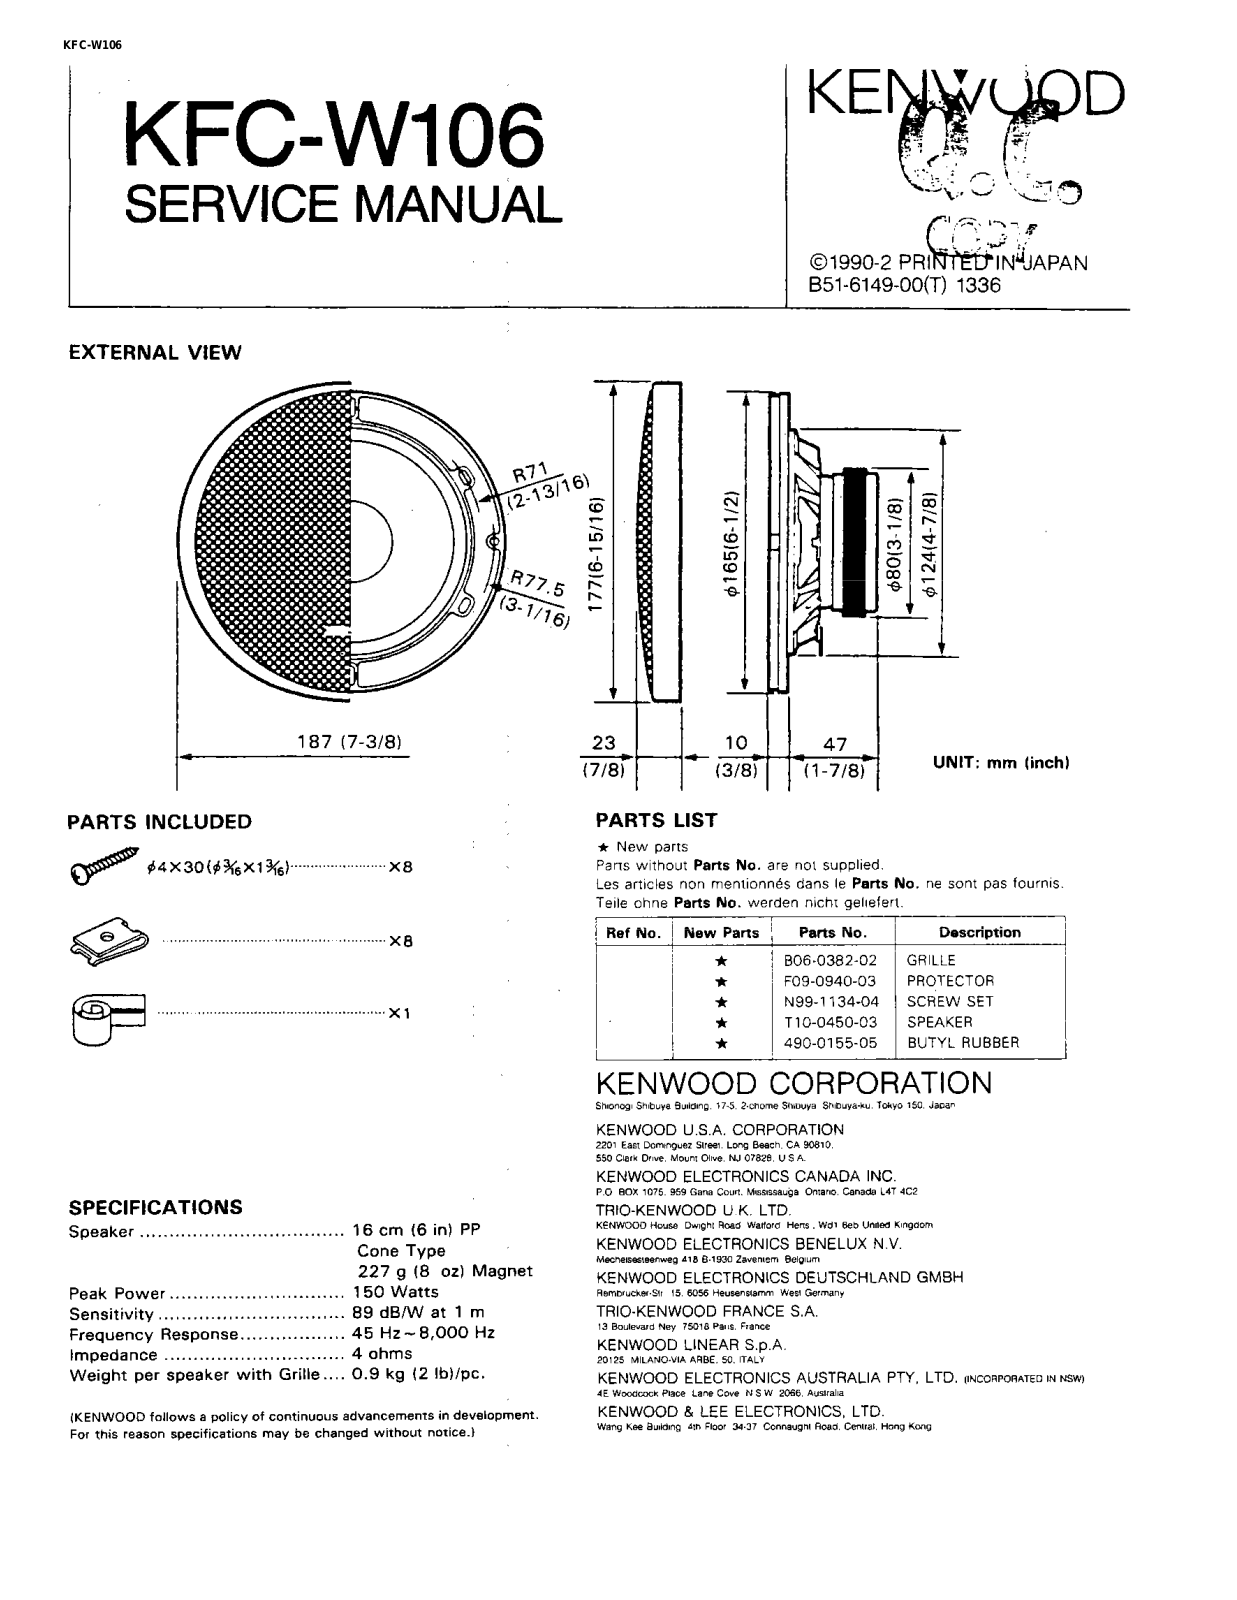 Kenwood KFC-W106 Service Manual